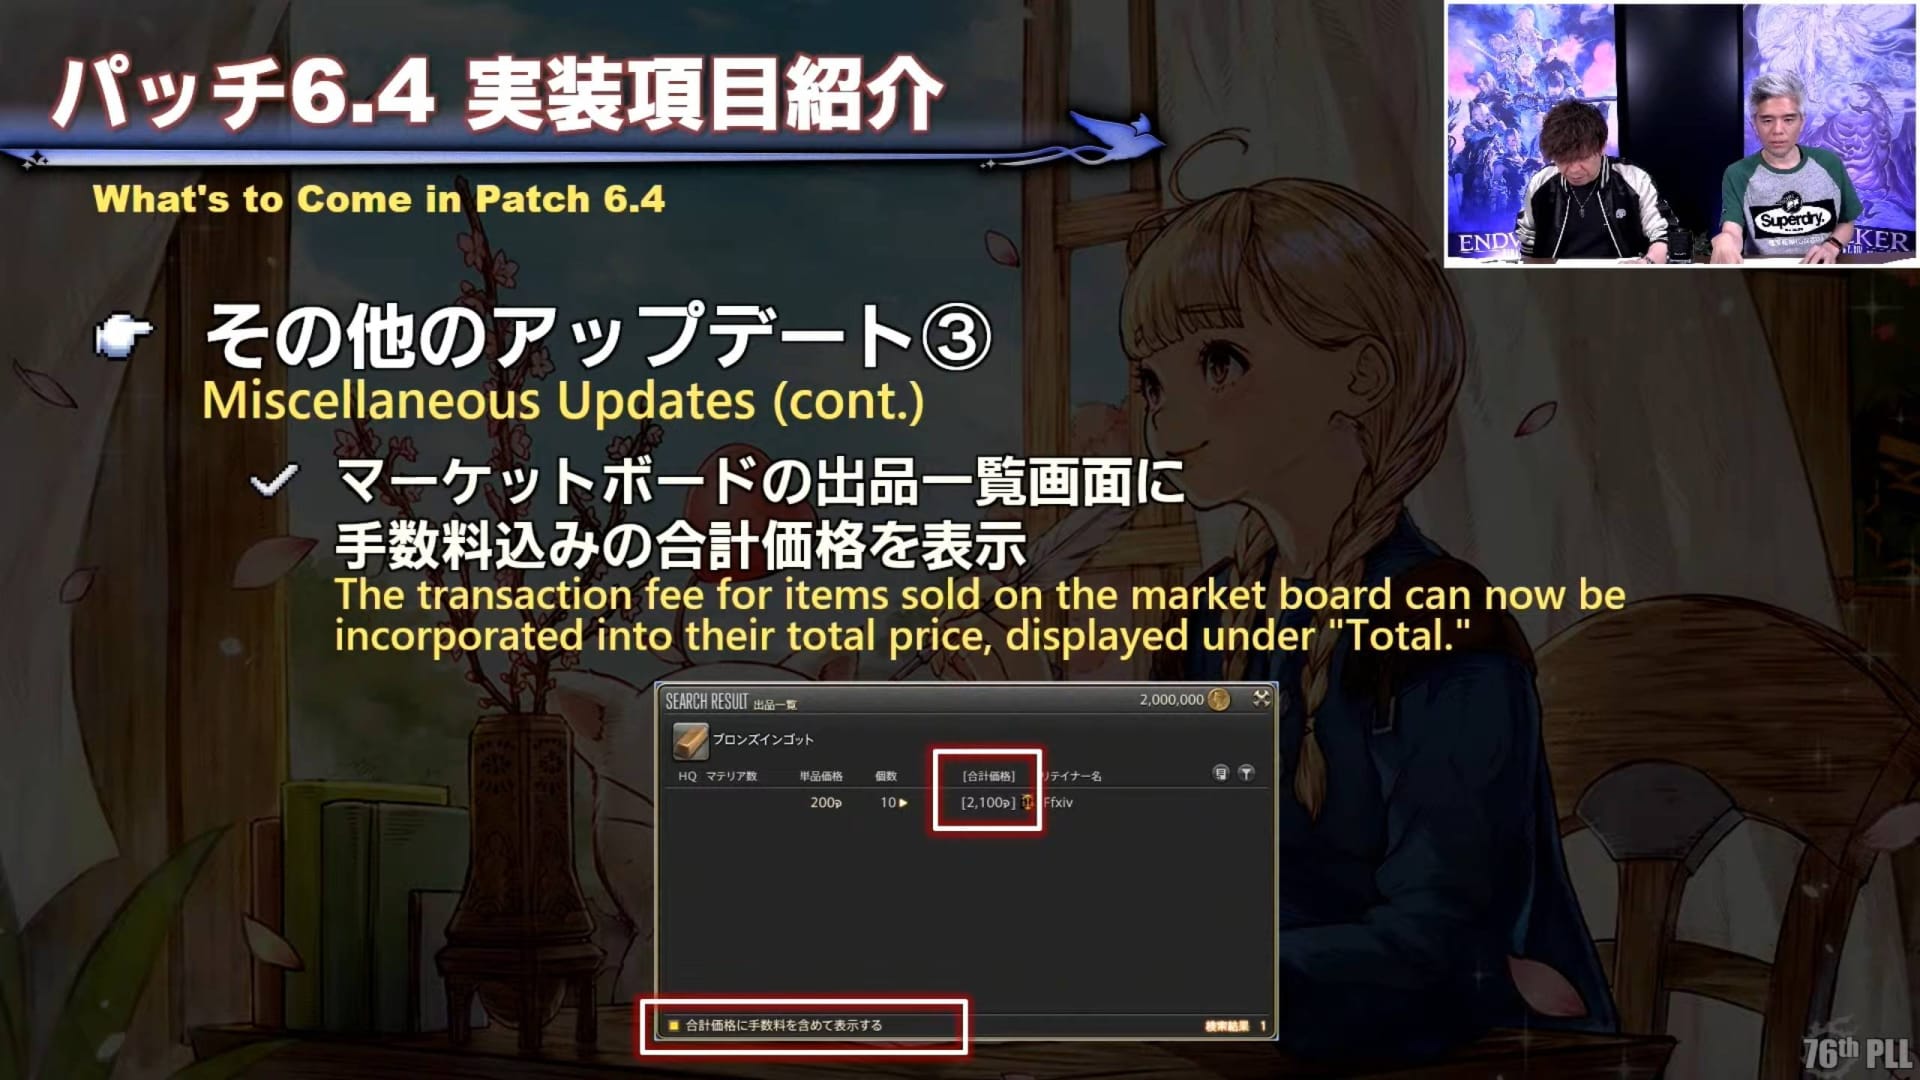 Final Fantasy XIV Update 6.4